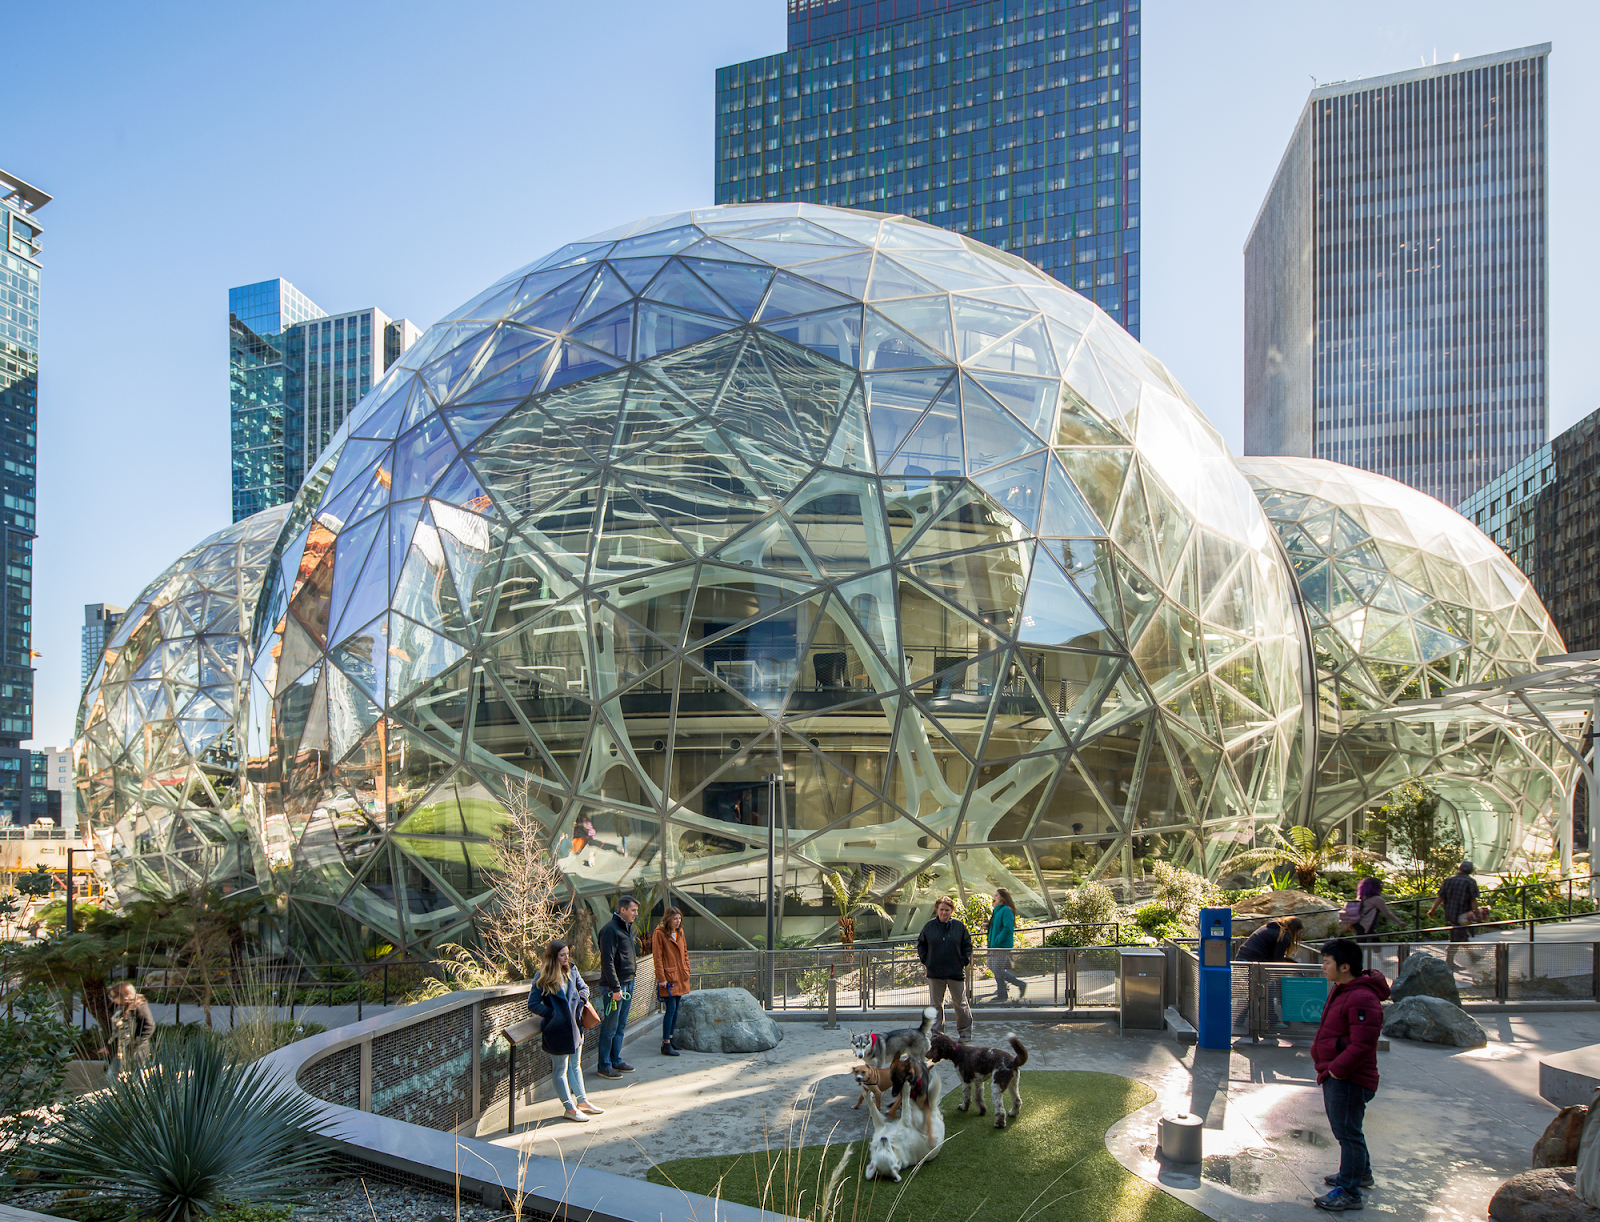 The Amazon Spheres in Seattle, USA: